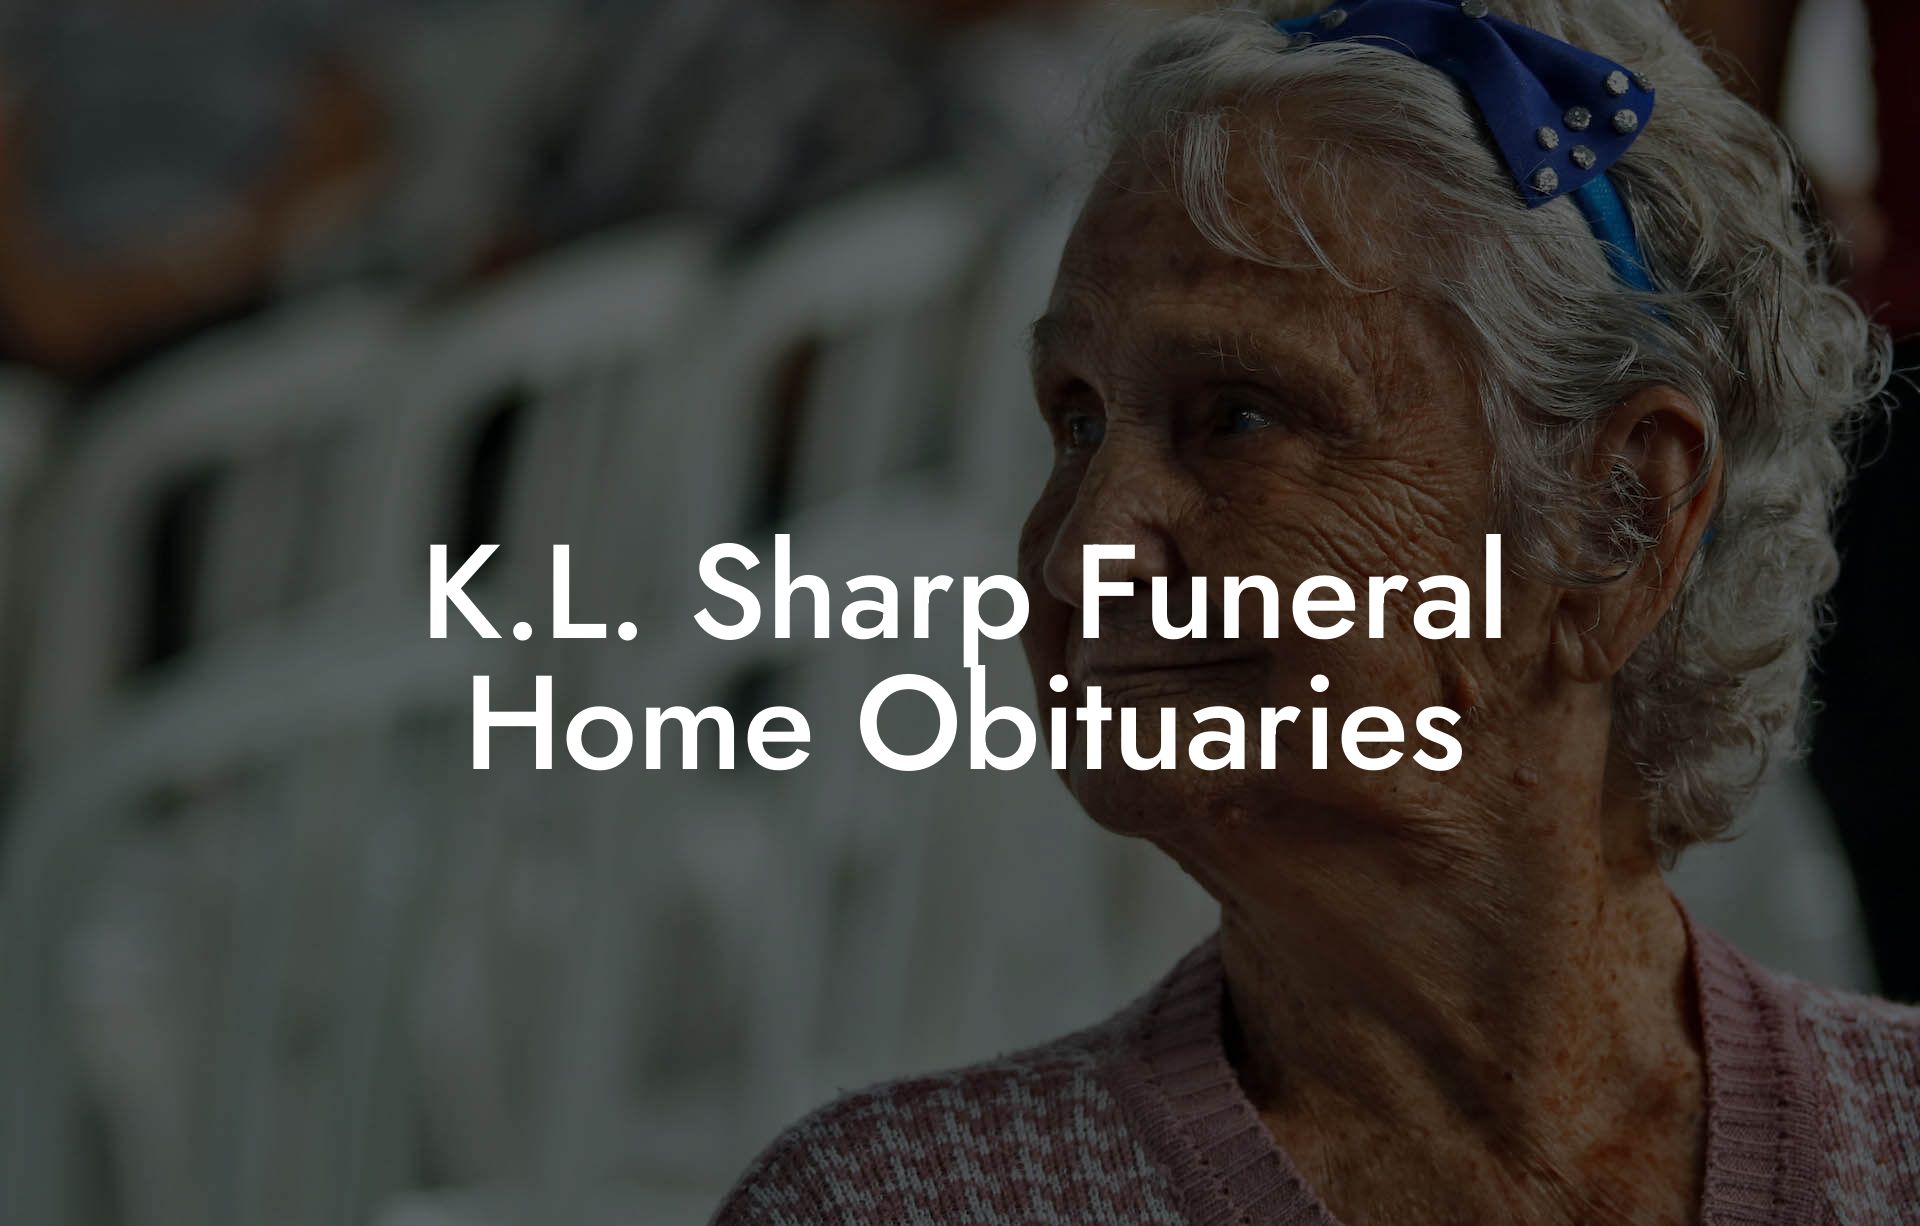 K.L. Sharp Funeral Home Obituaries